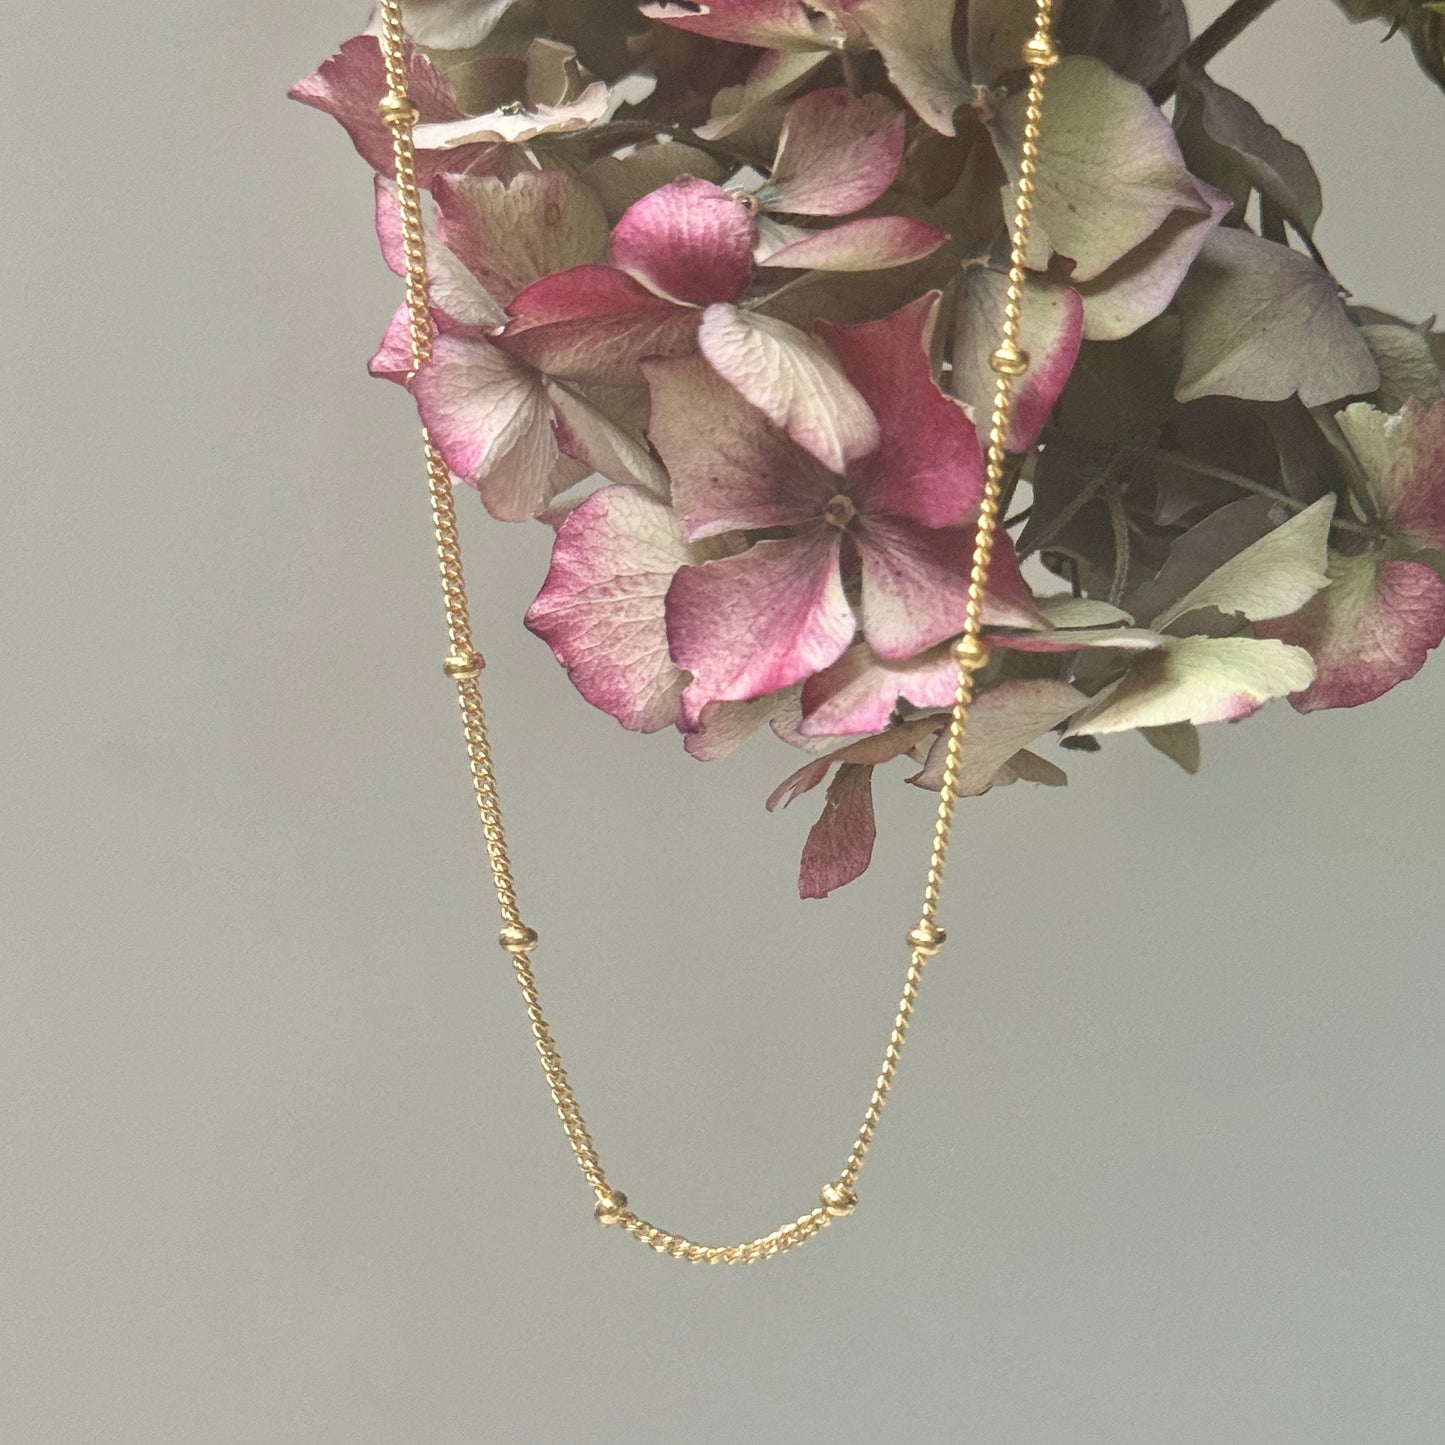 Freshwater Pearl (Midi Bead) Pendant Necklace